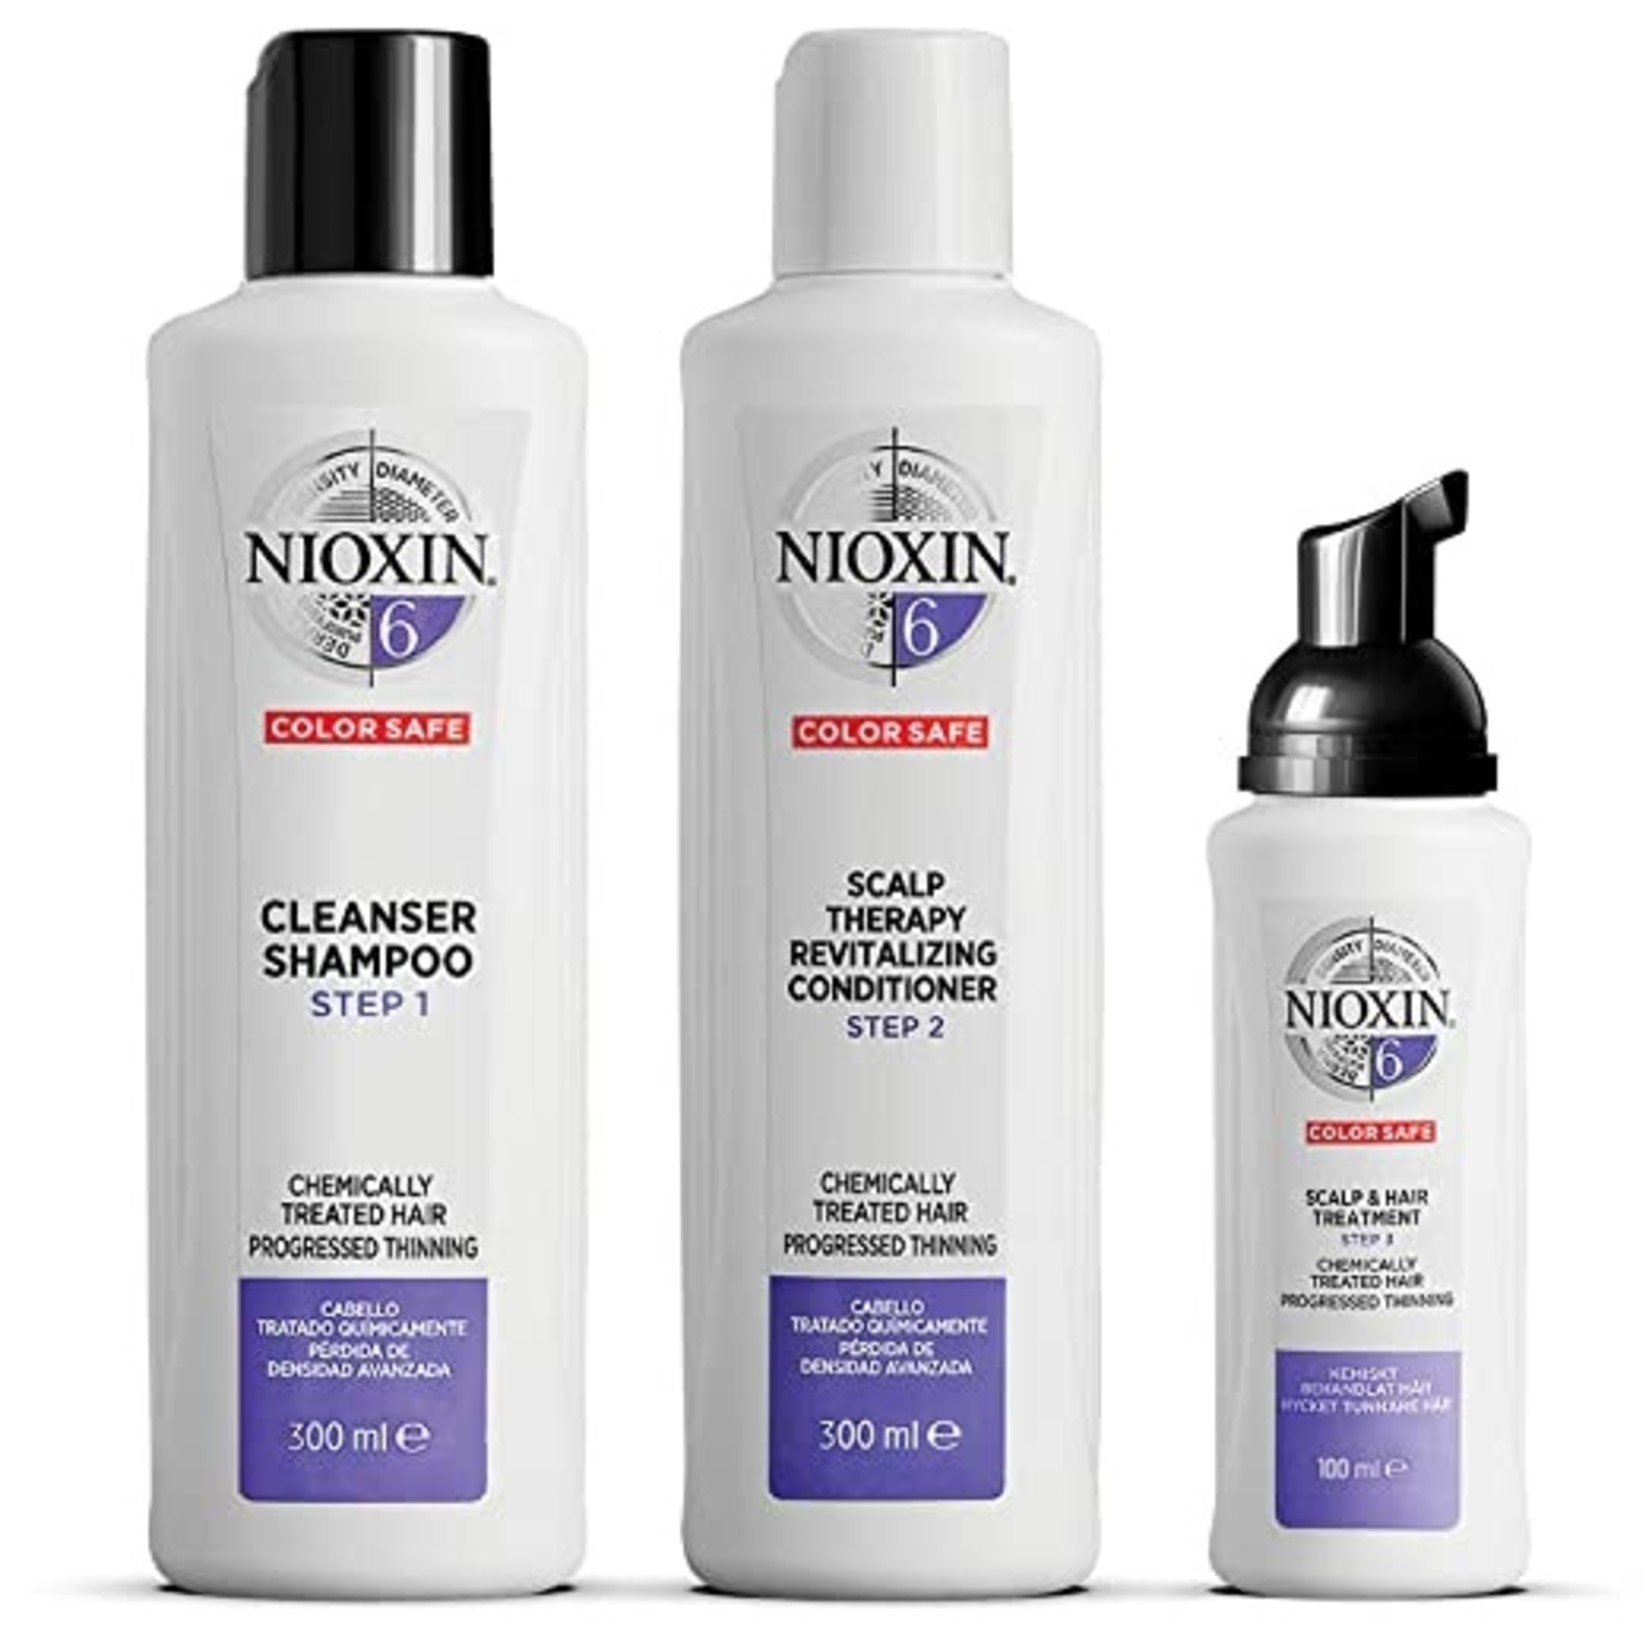 nioxin Nioxin System 6 Kit